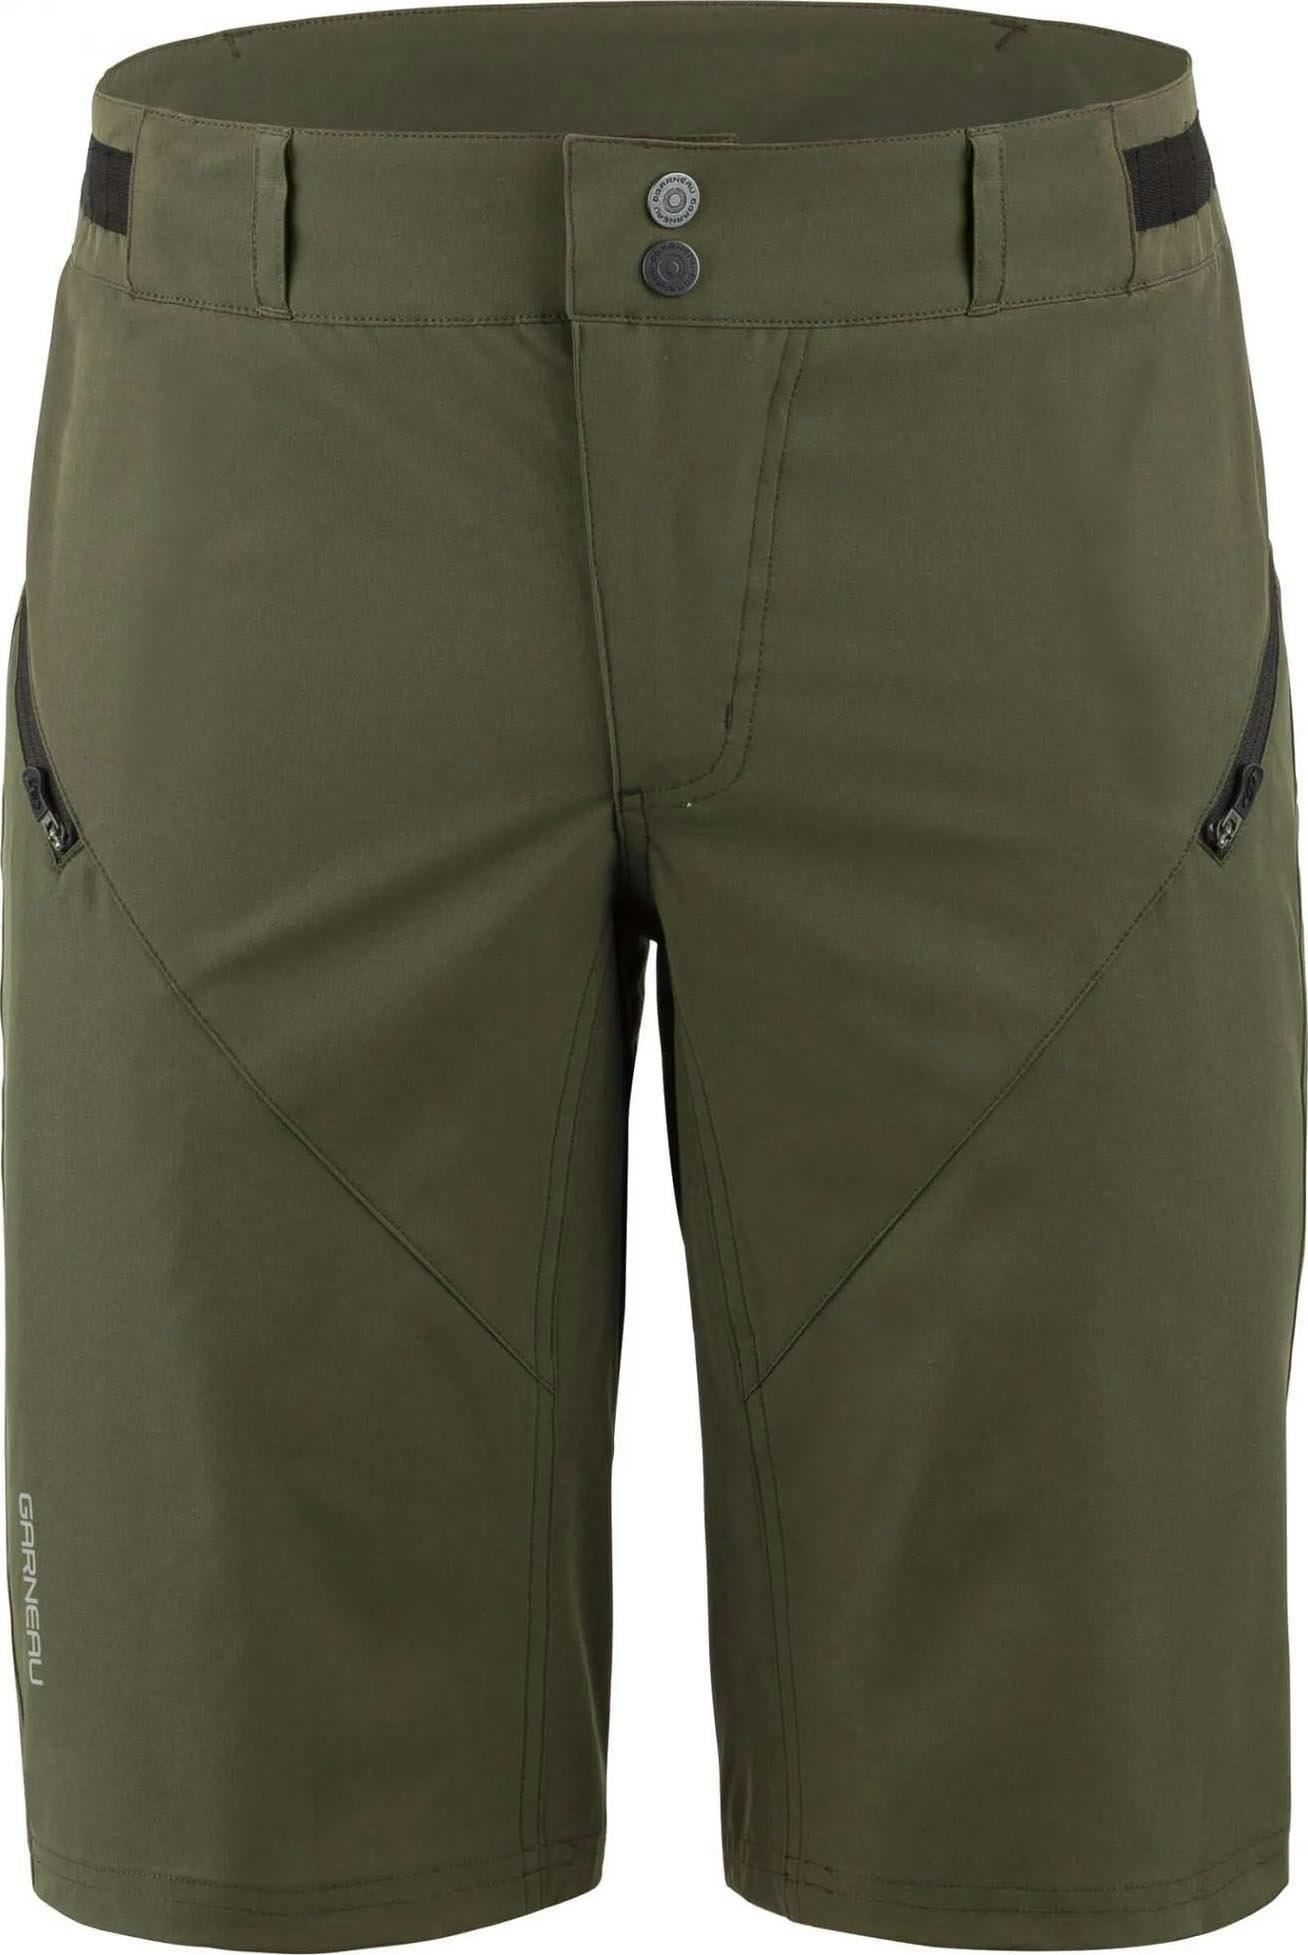 Product image for Leeway 2 Shorts - Men's